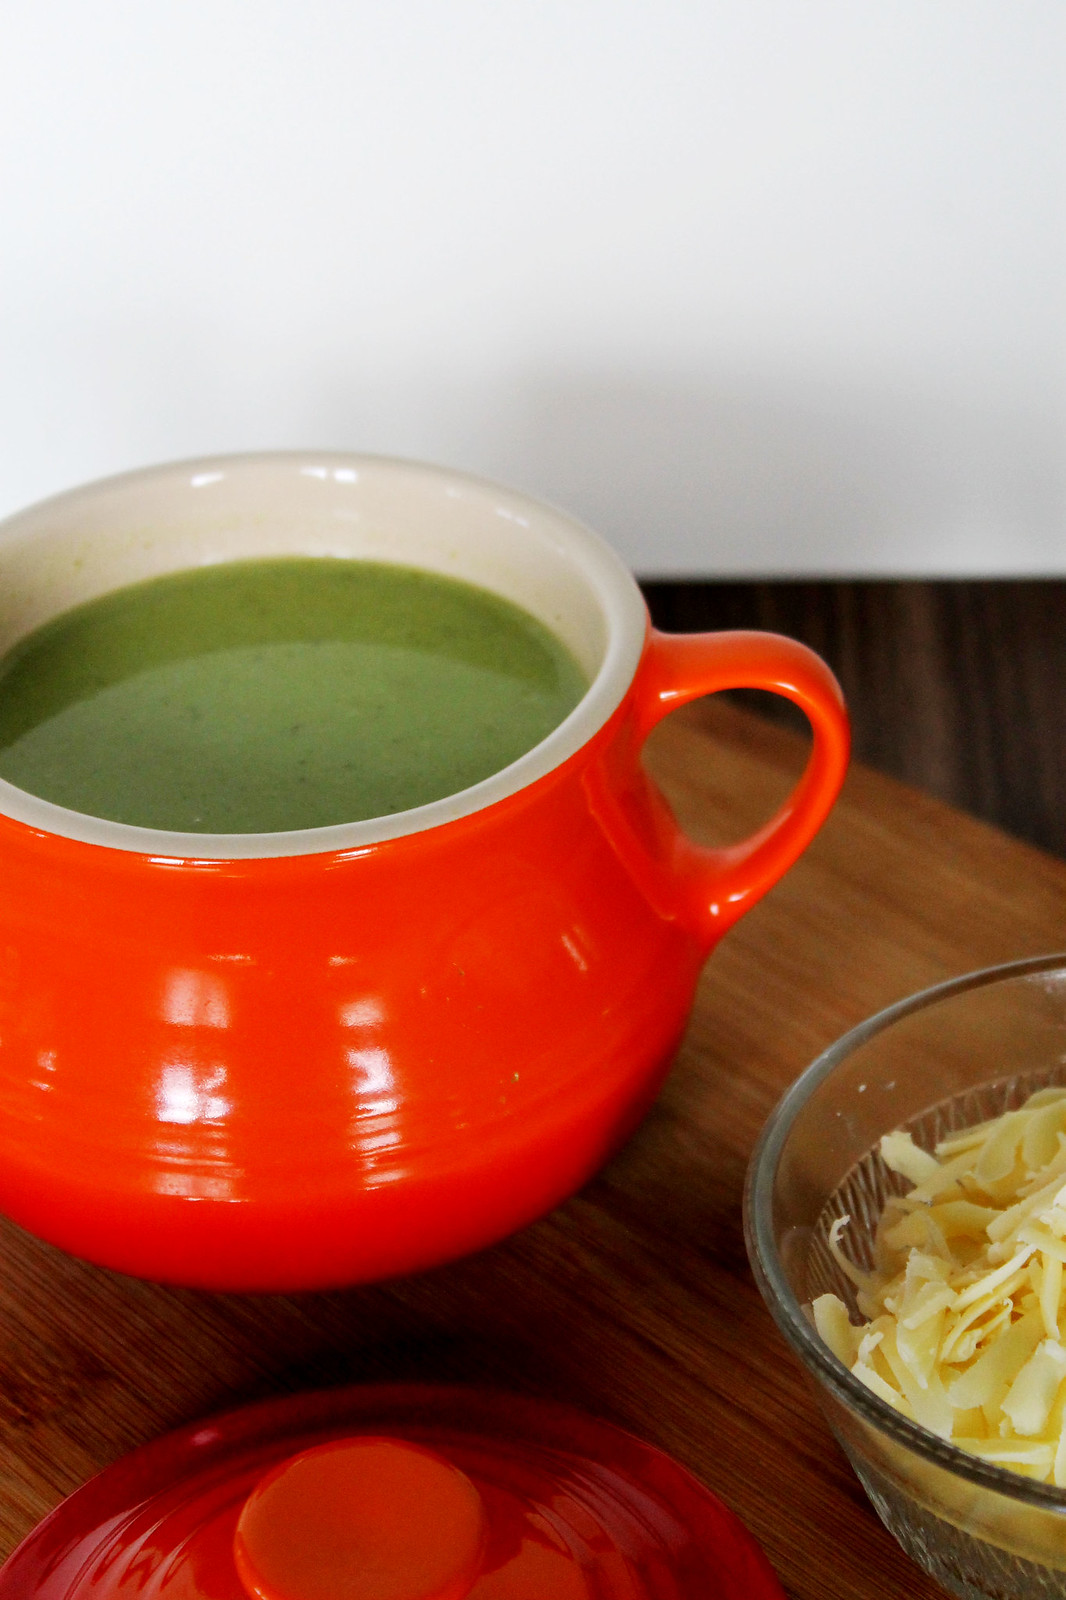 cheesy green soup